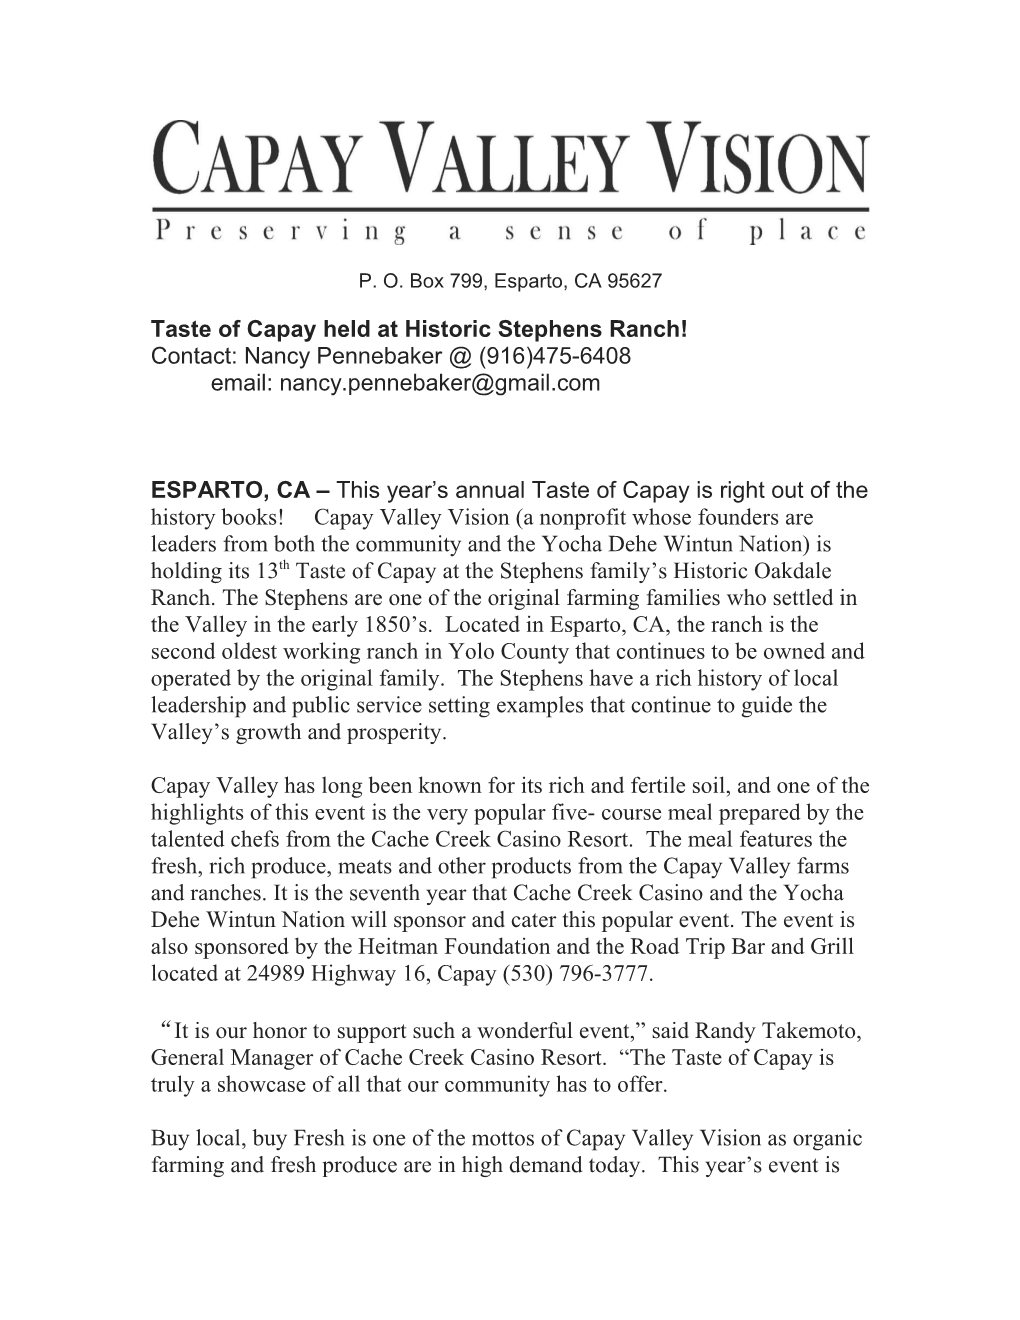 Taste of Capay Held at Historic Stephens Ranch!